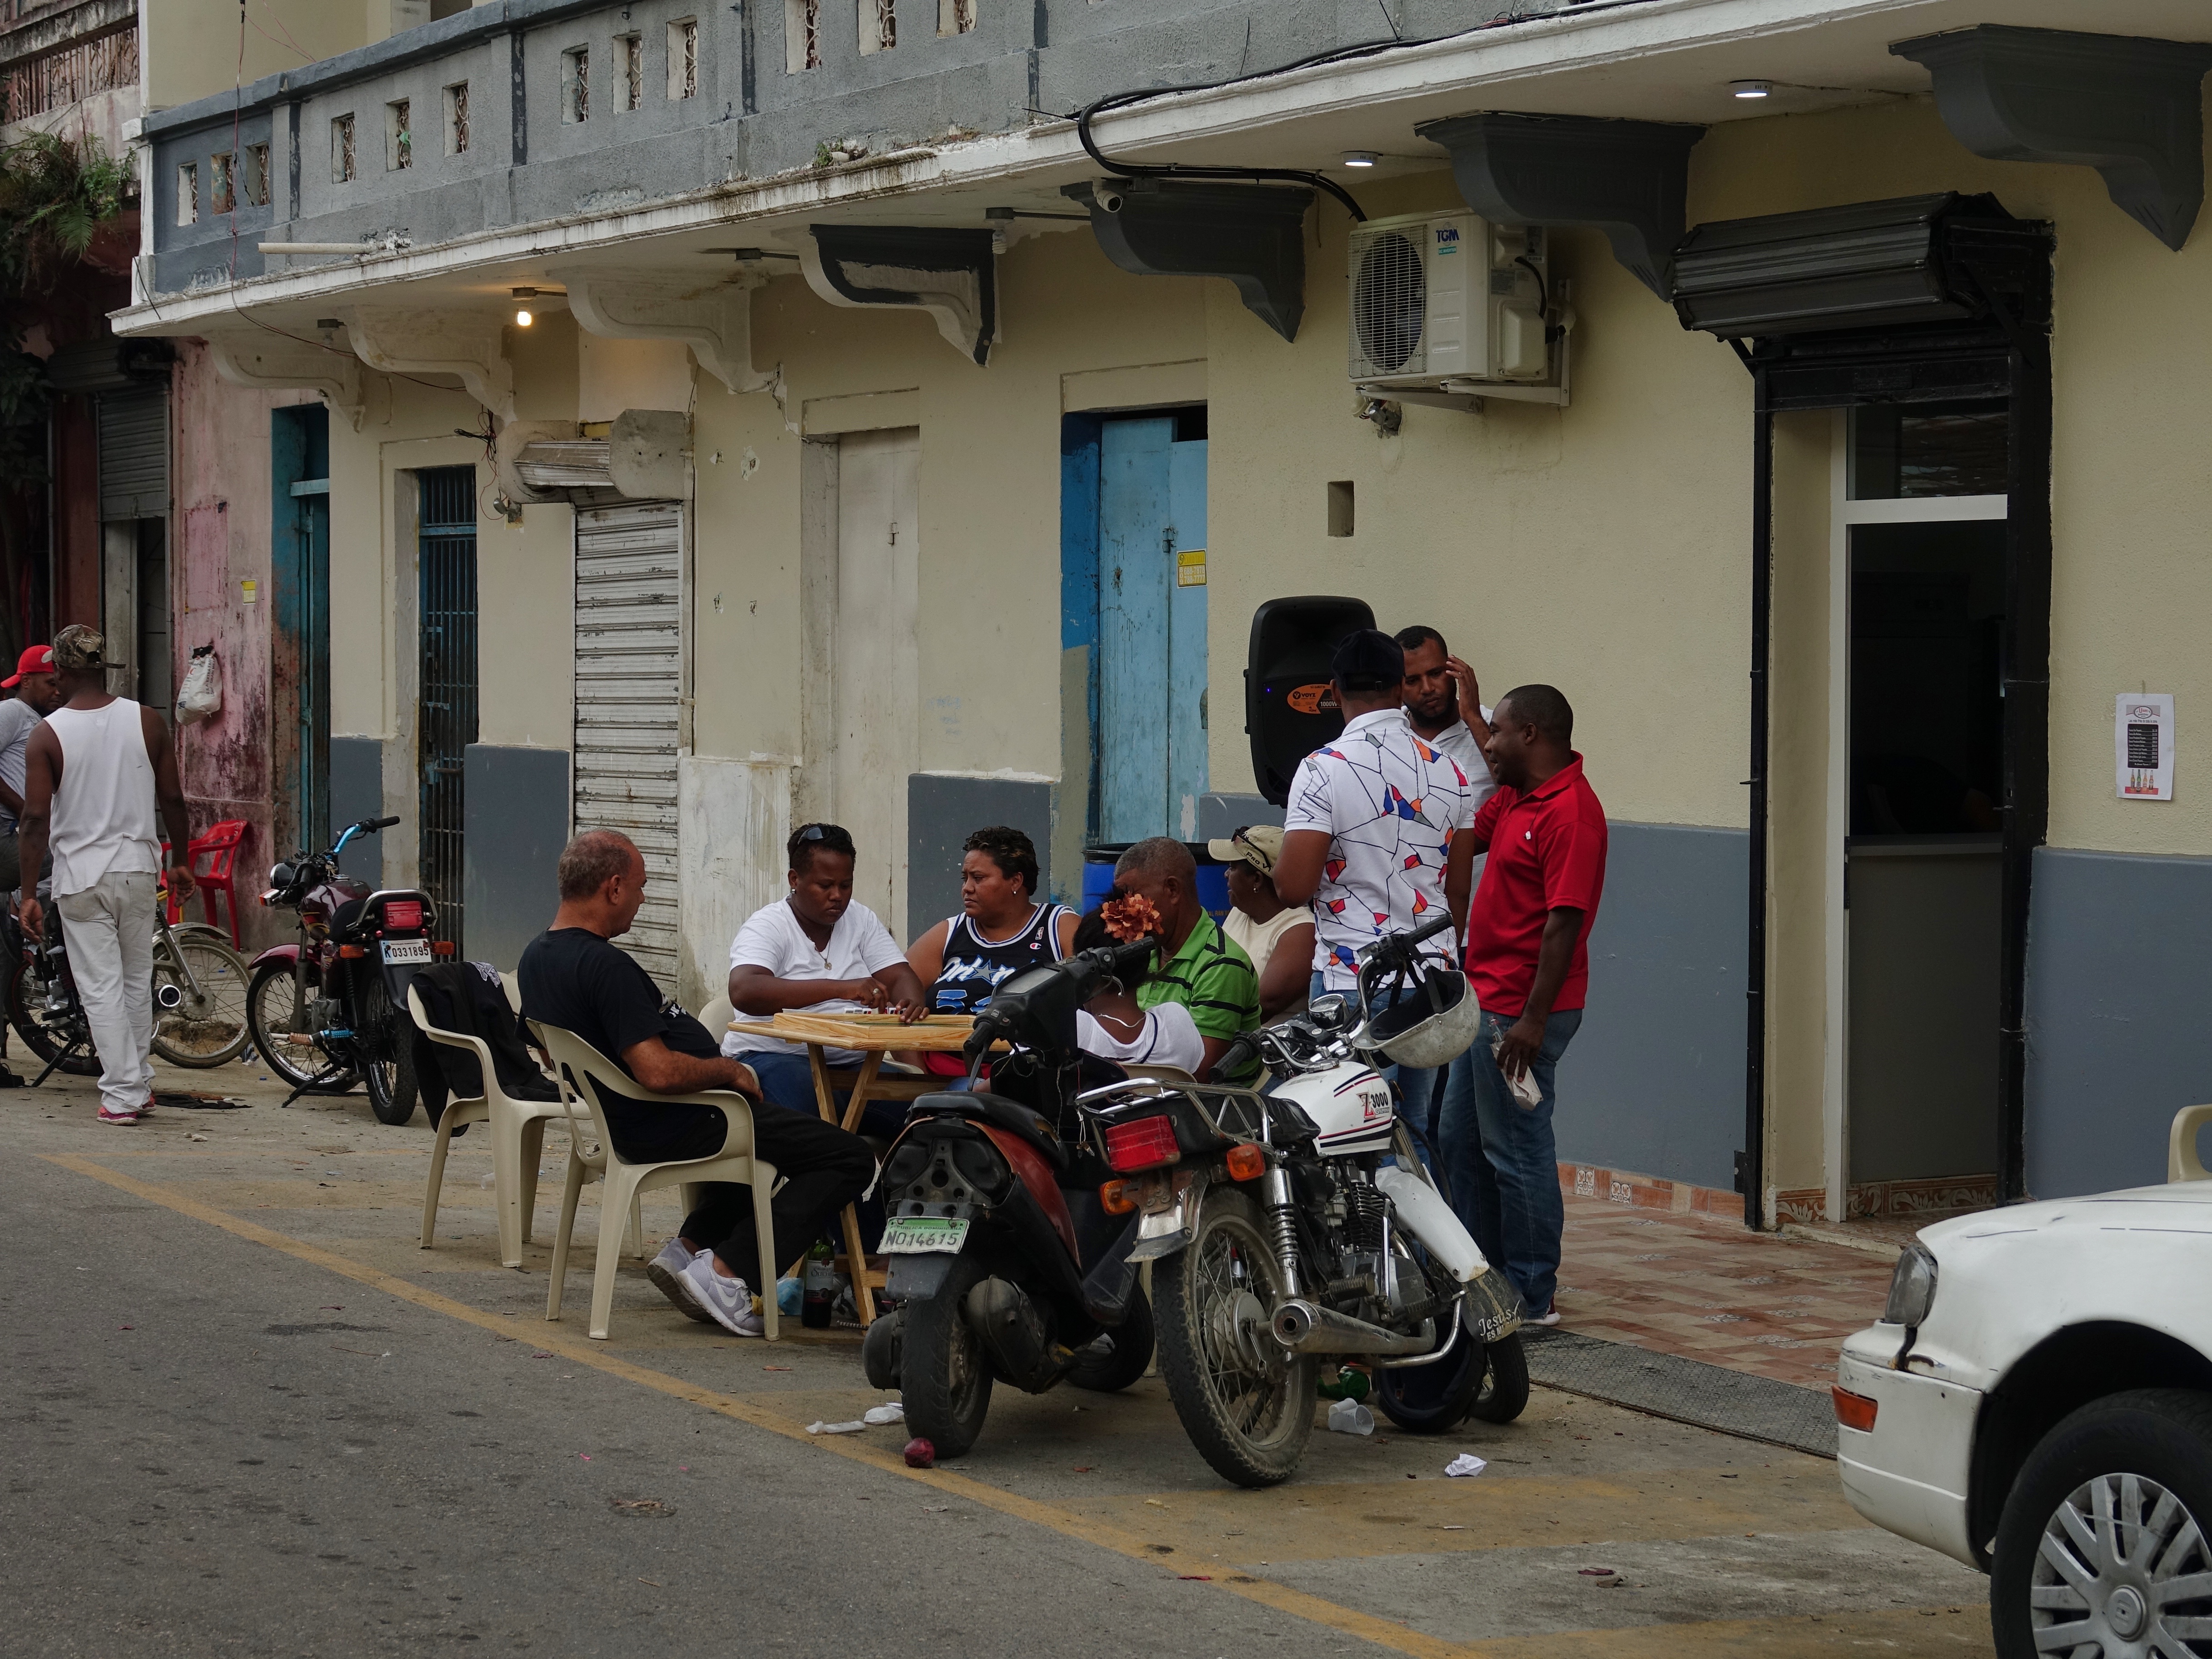 Street scene outside hair salon, by Mercado Modelo